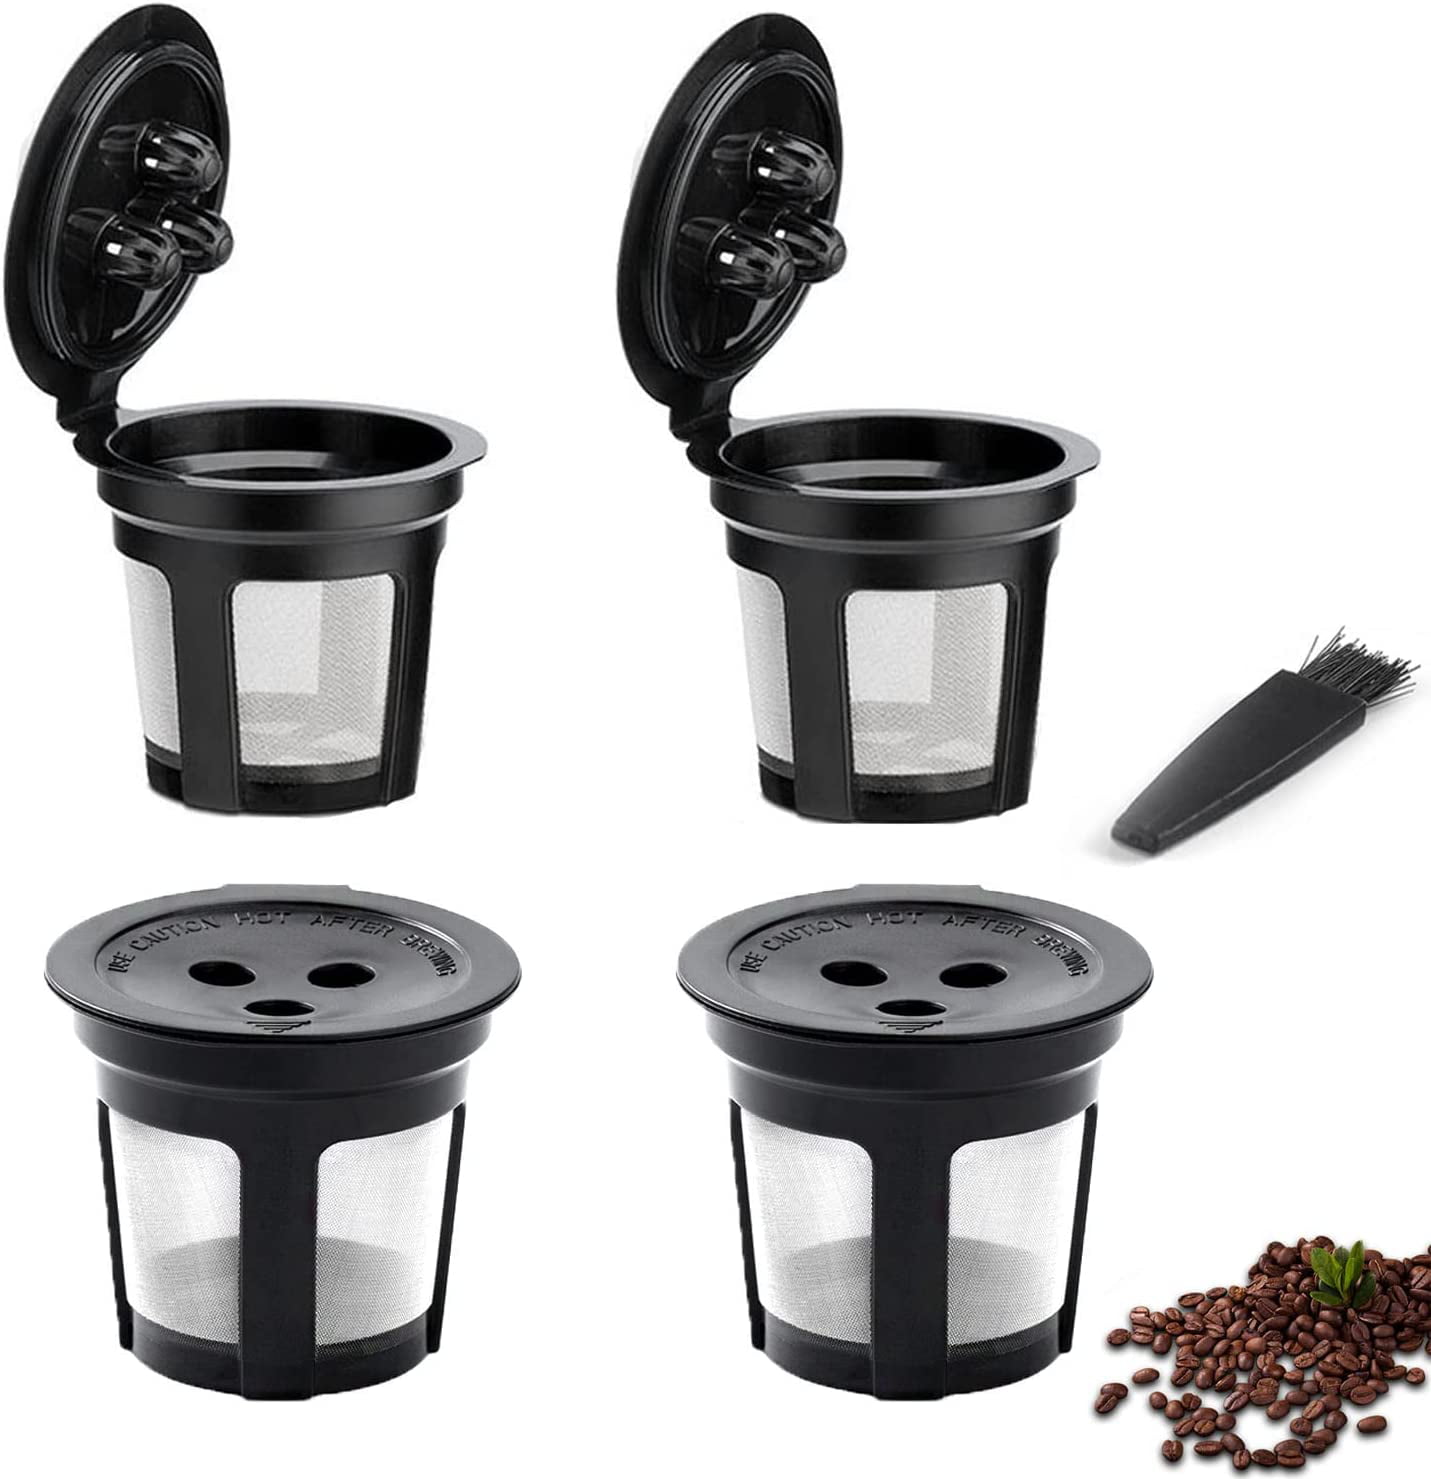  SIMTWO Reusable Coffee Pods for Ninja Dual Brew Pro, 4 Pack  Reusable Coffee Filter for Ninja Dual Brew Coffee Maker, Permanent K Cups  Coffee Accessories for Ninja Coffee Maker CFP201, CFP301